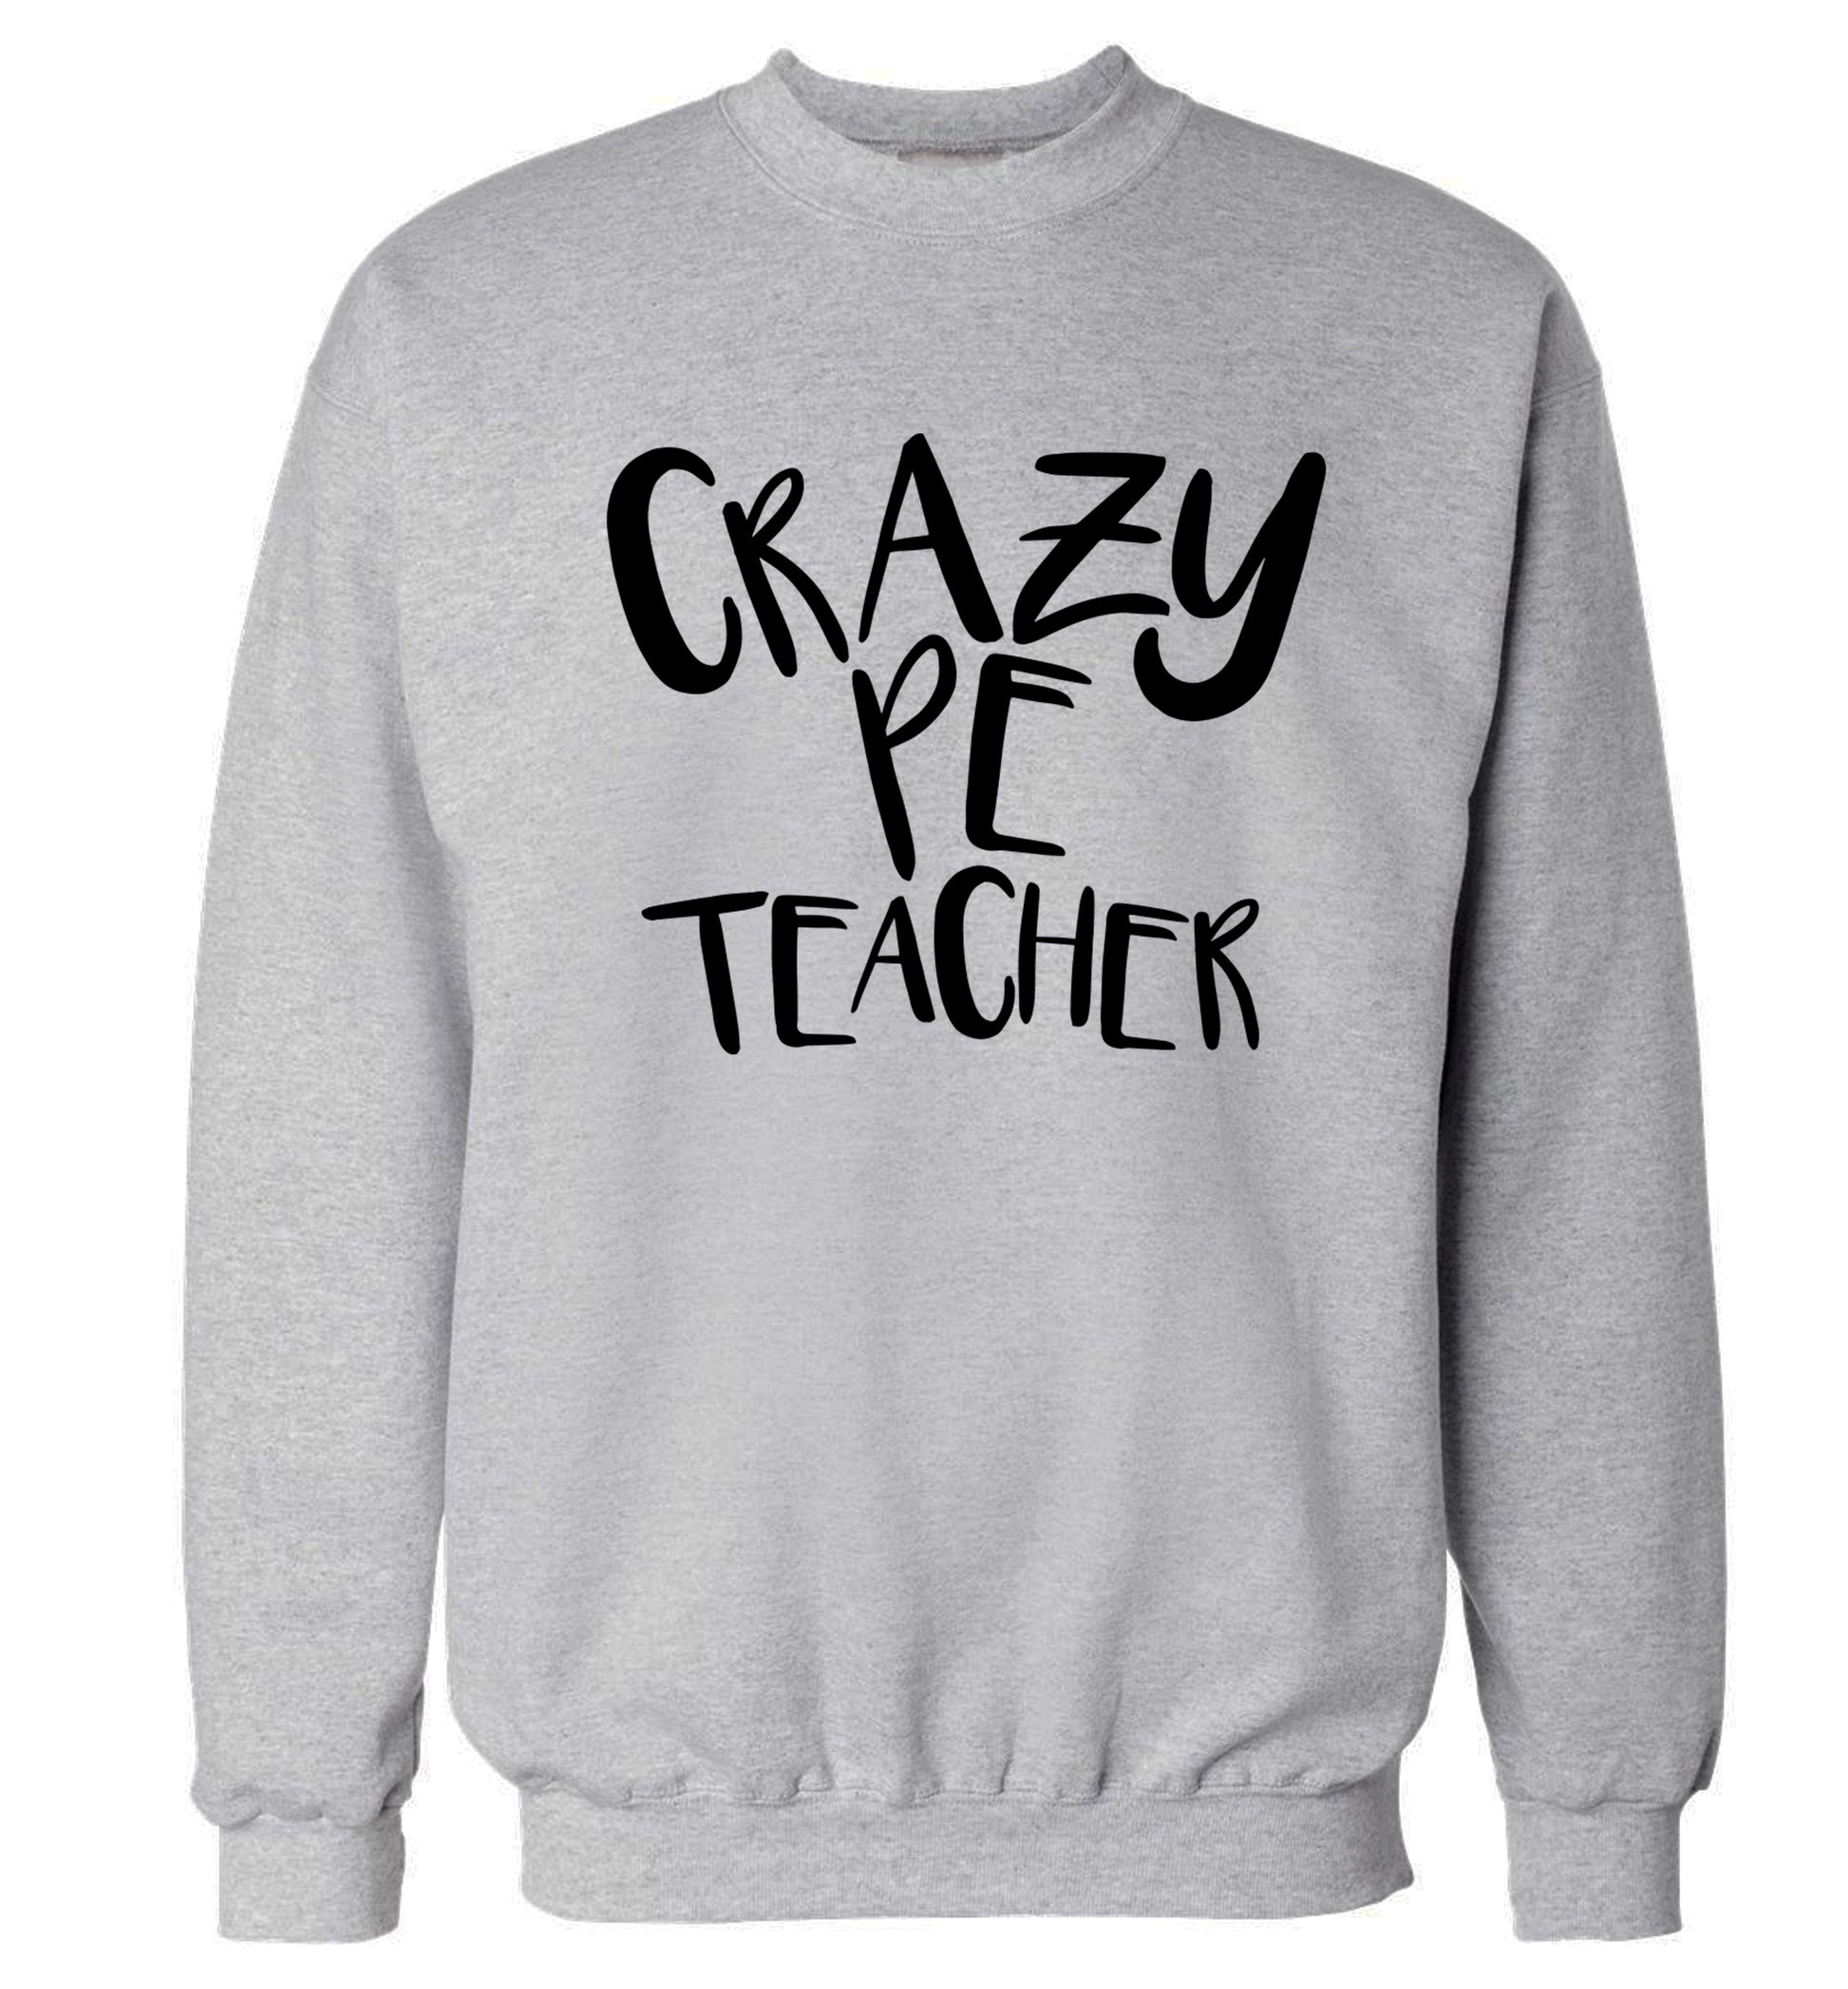 Crazy PE teacher Adult's unisex grey Sweater 2XL